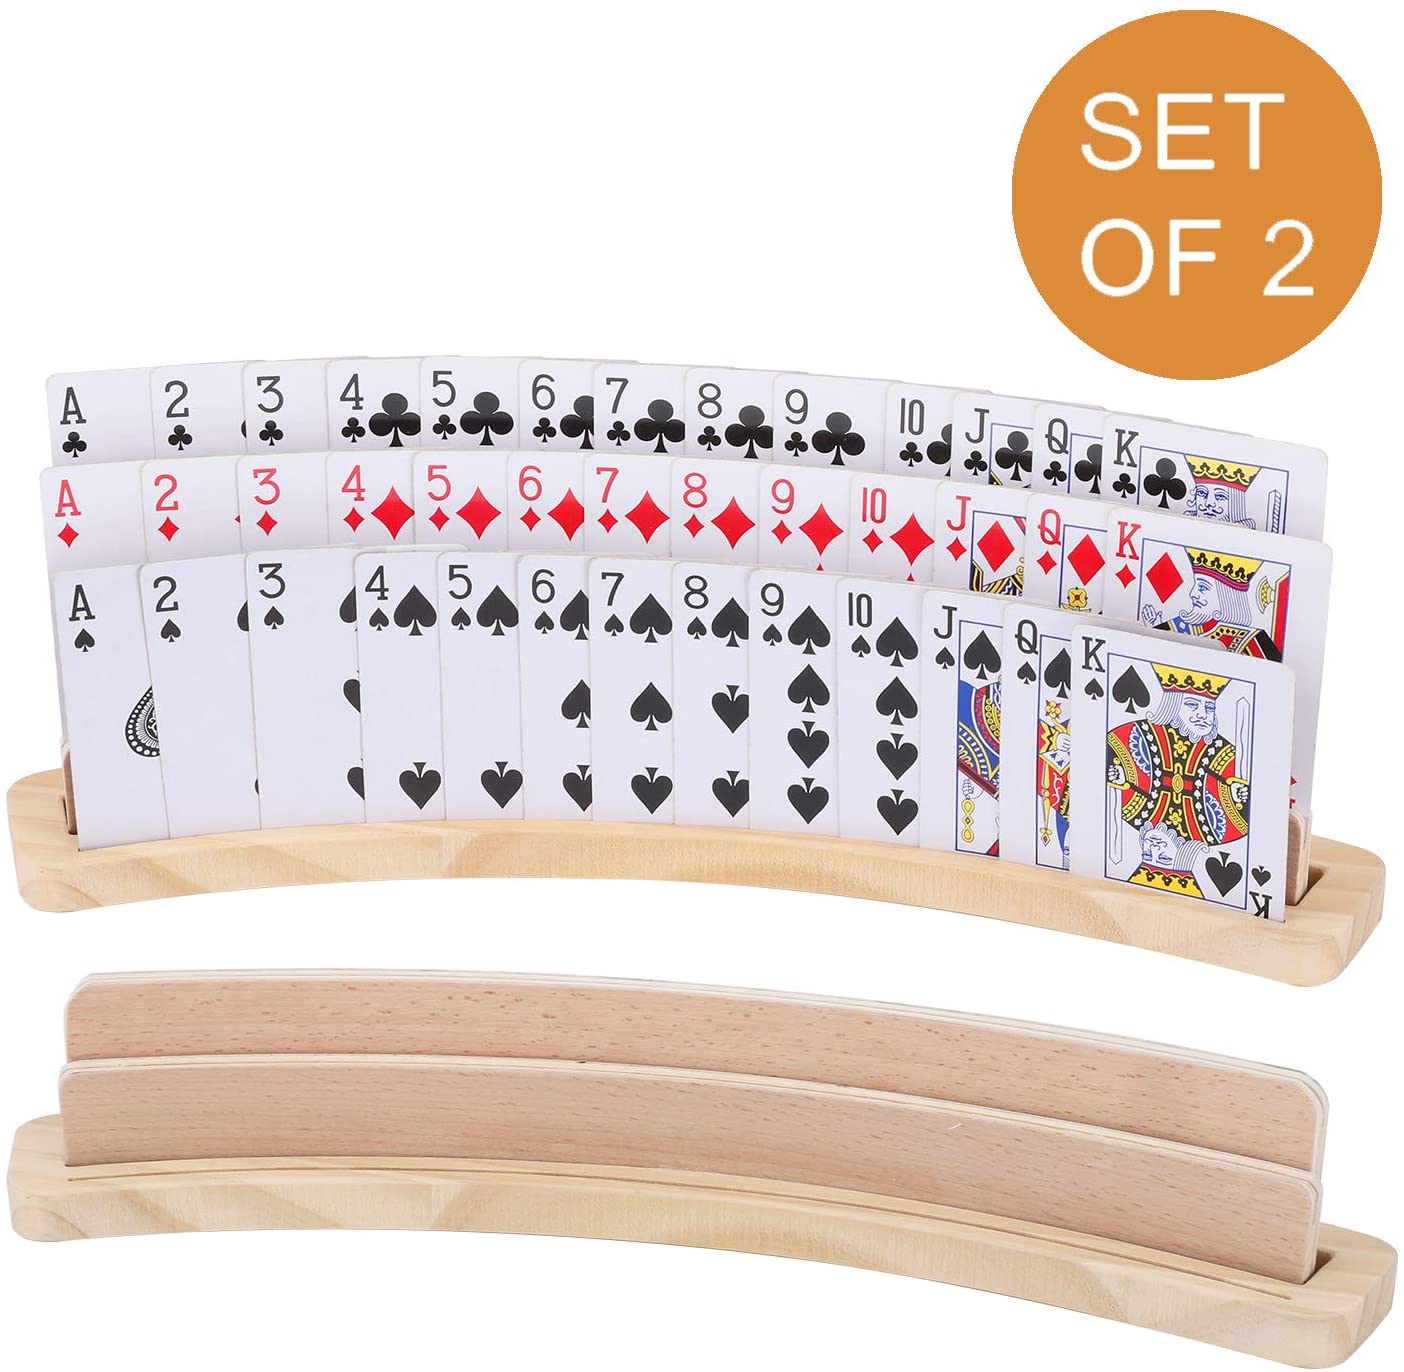 Exqline Wood Playing Card Holders Tray Racks Organizer Set of 2